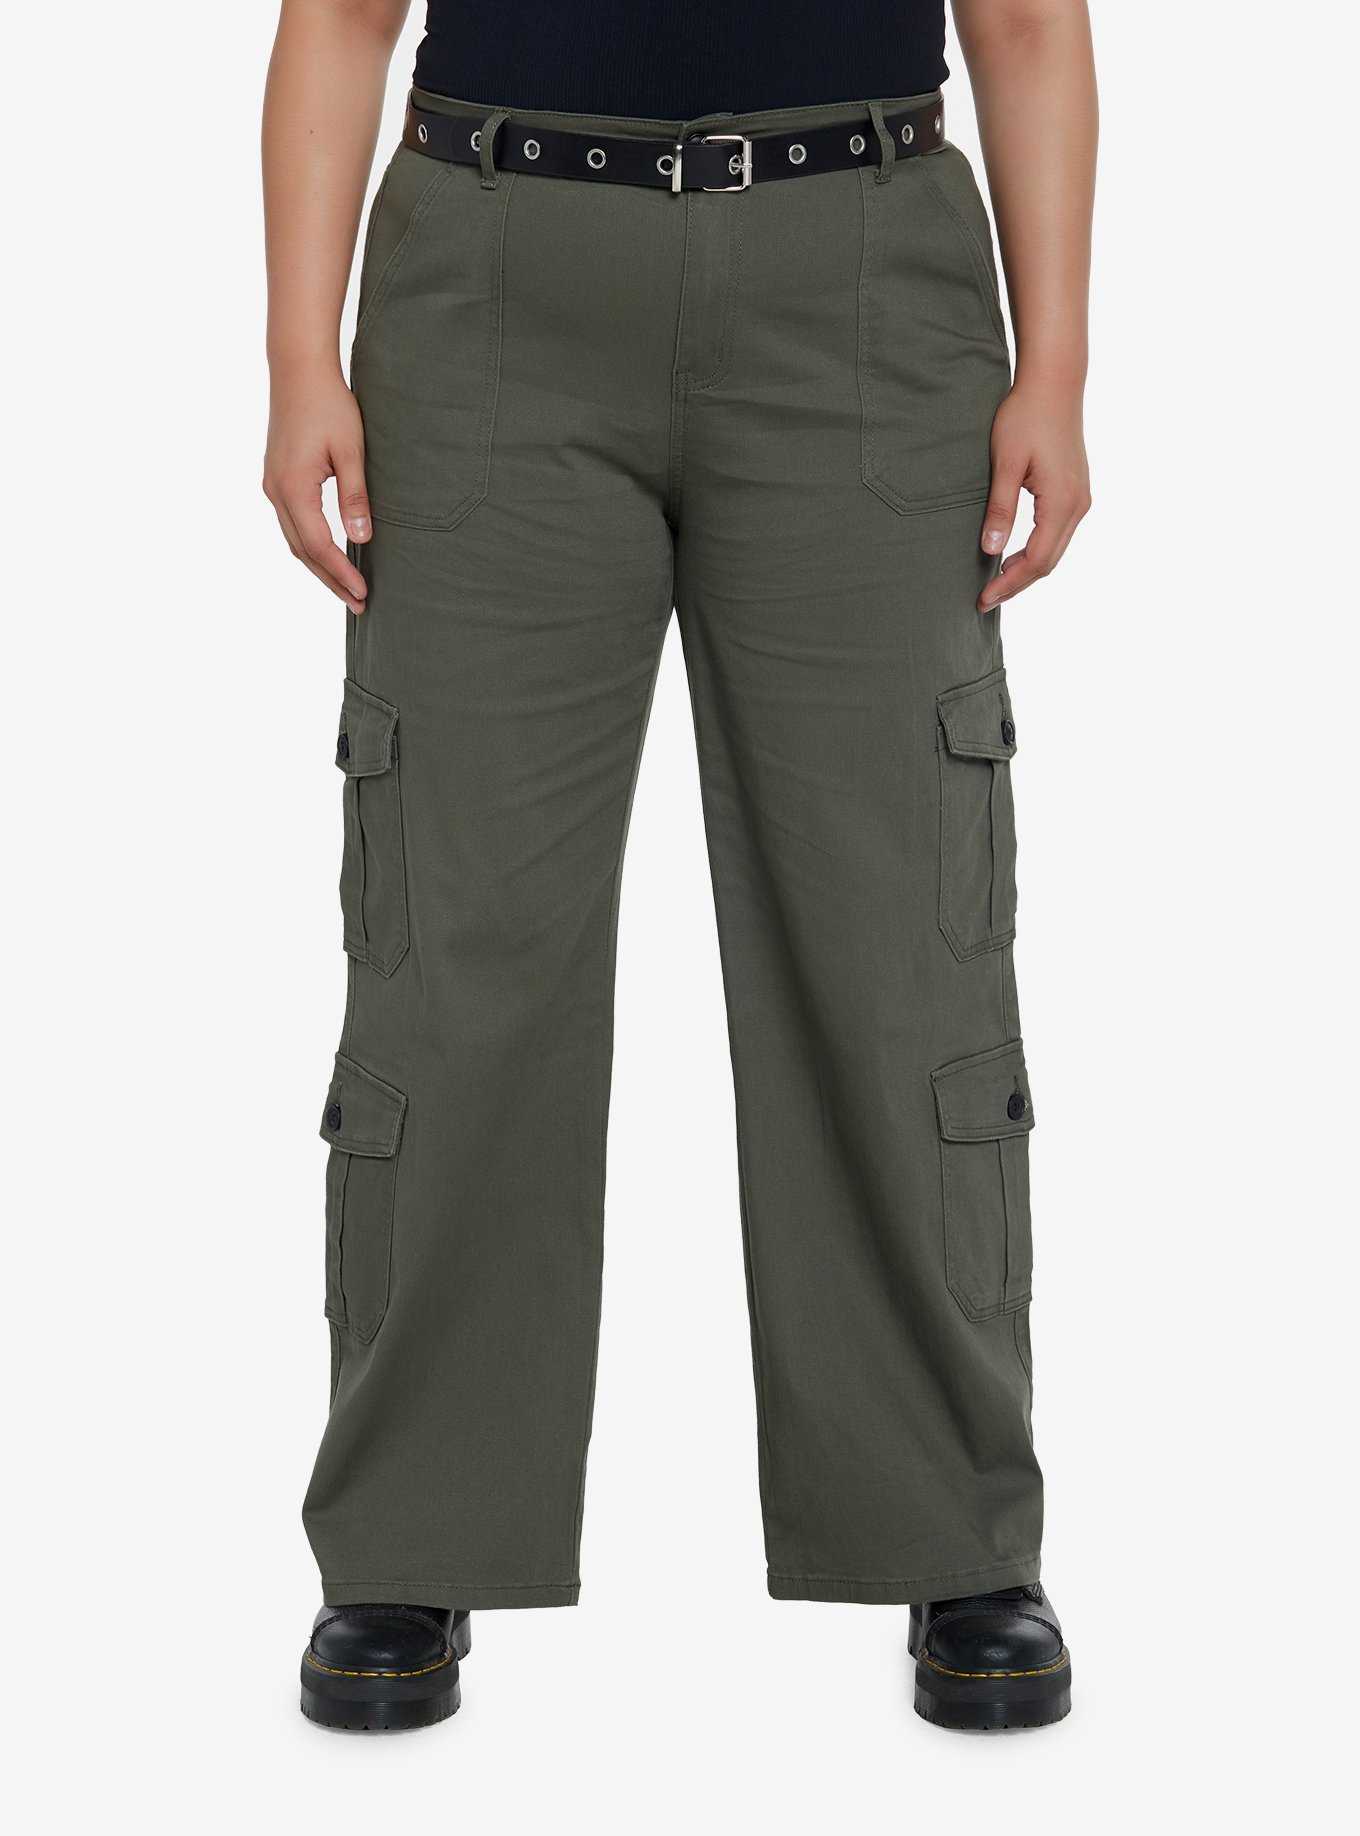 Hot Topic Olive Green Multi-Pocket Girls Cargo Pants